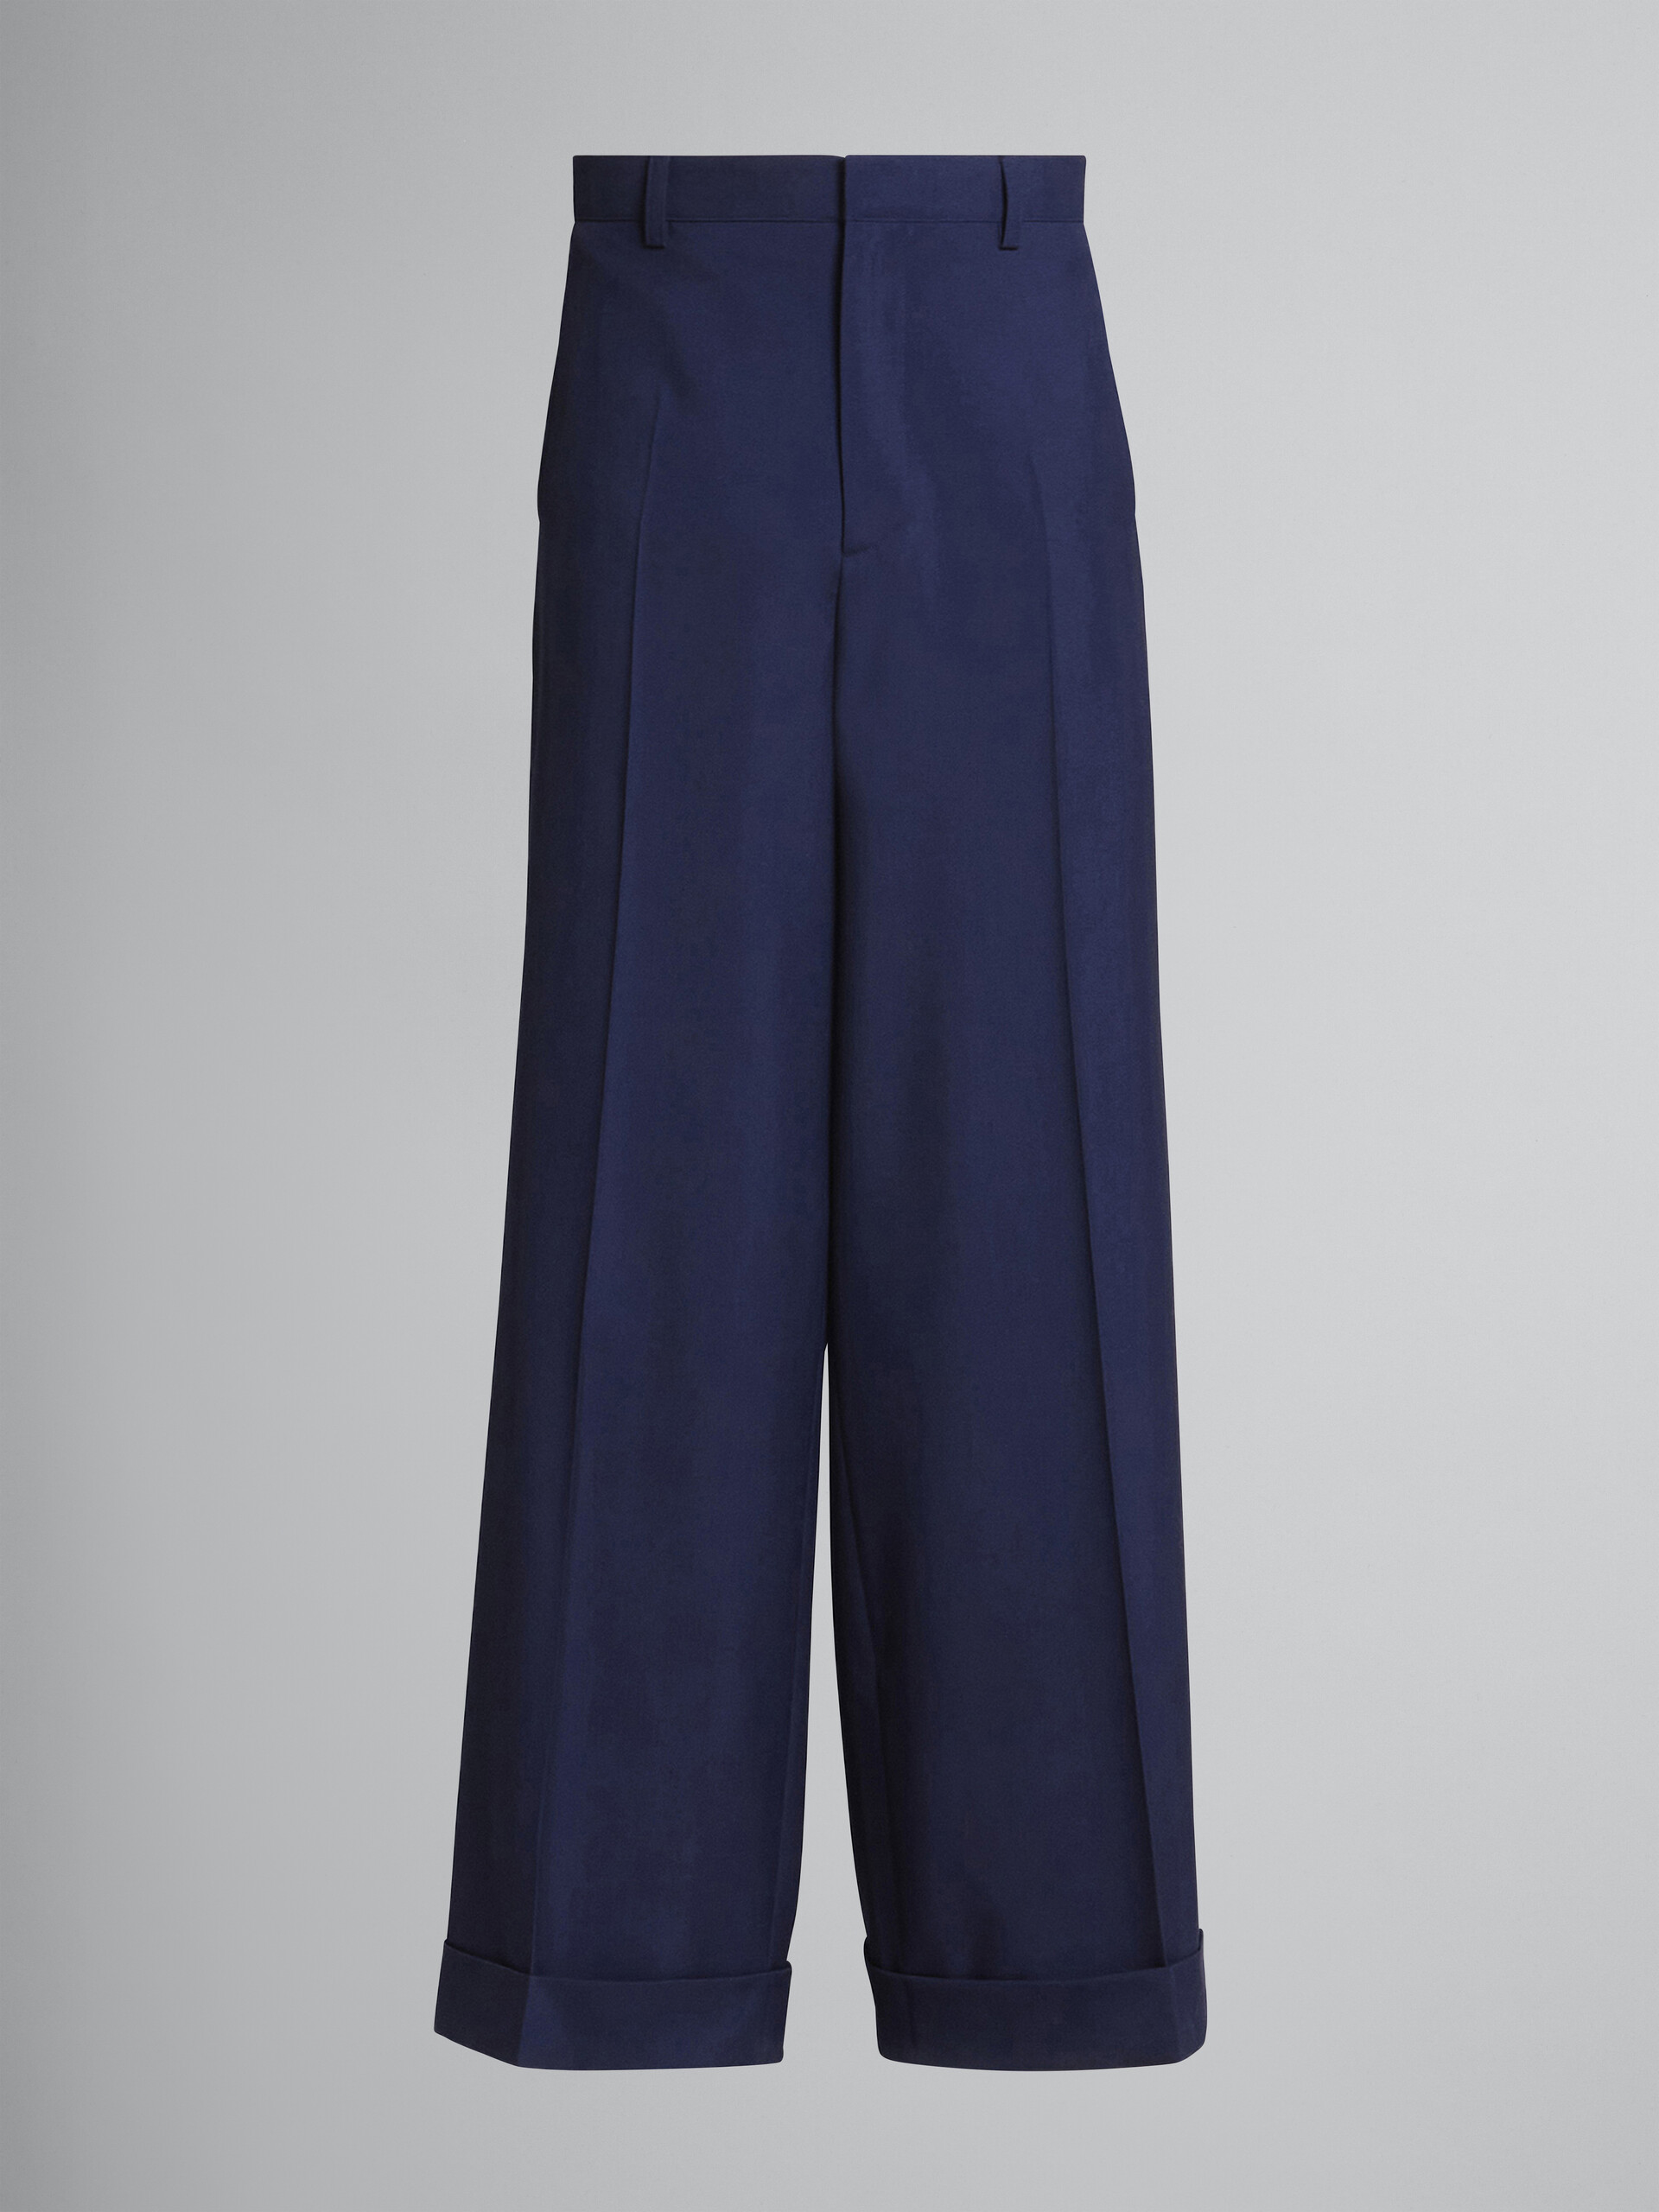 Tropical wool high-waist pants - Pants - Image 1